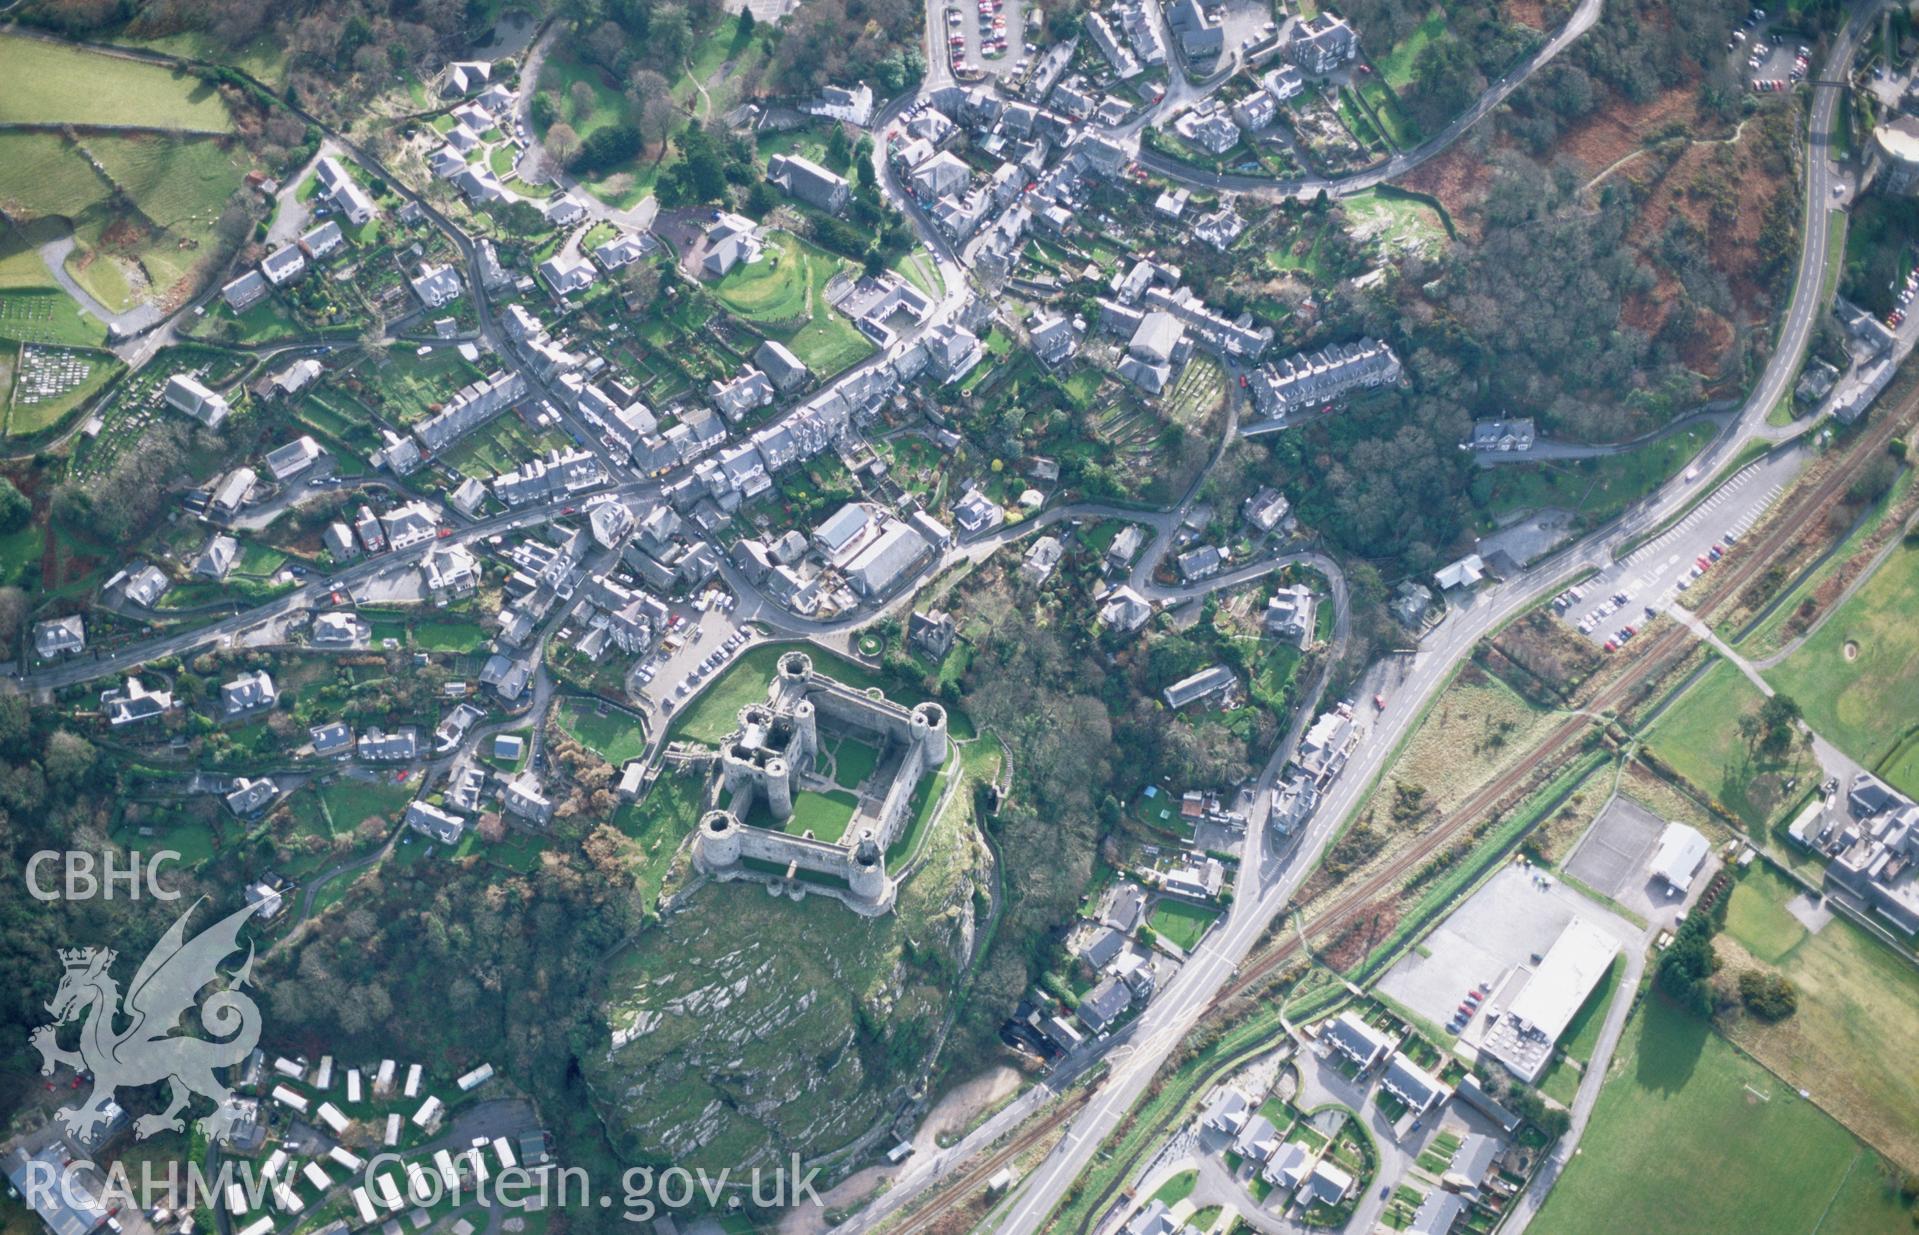 Slide of RCAHMW colour oblique aerial photograph of Harlech Castle, taken by T.G. Driver, 2002.